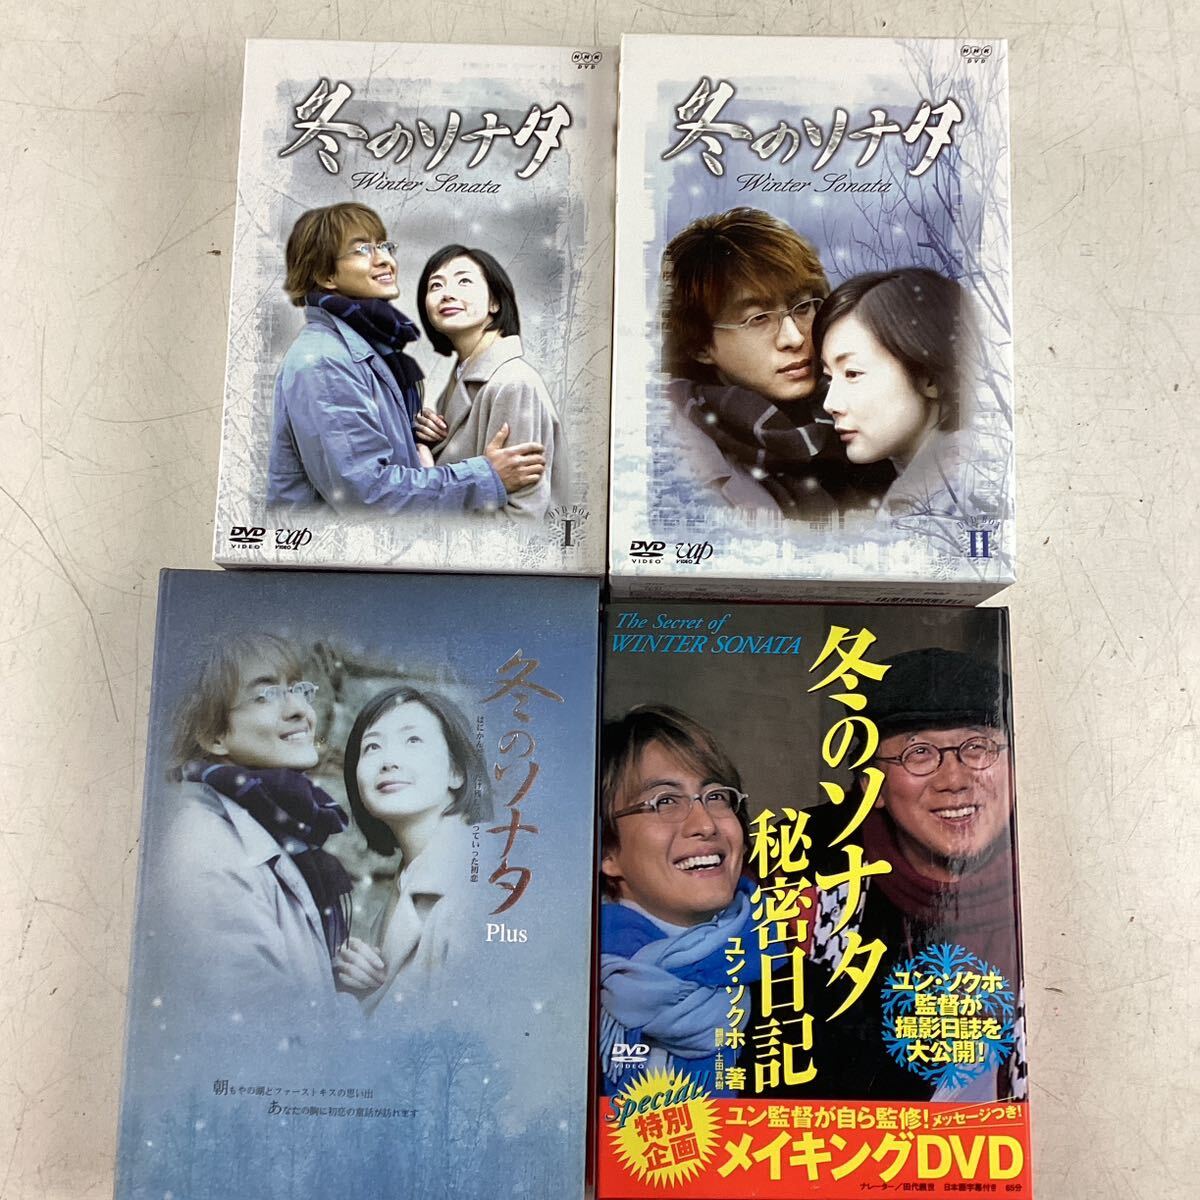 t537 зимний sonata DVD-BOX все тома в комплекте зима sona корейская драма .. драма NHKpe*yon Jun che *jiuyon sama скучающий за границей драма б/у 